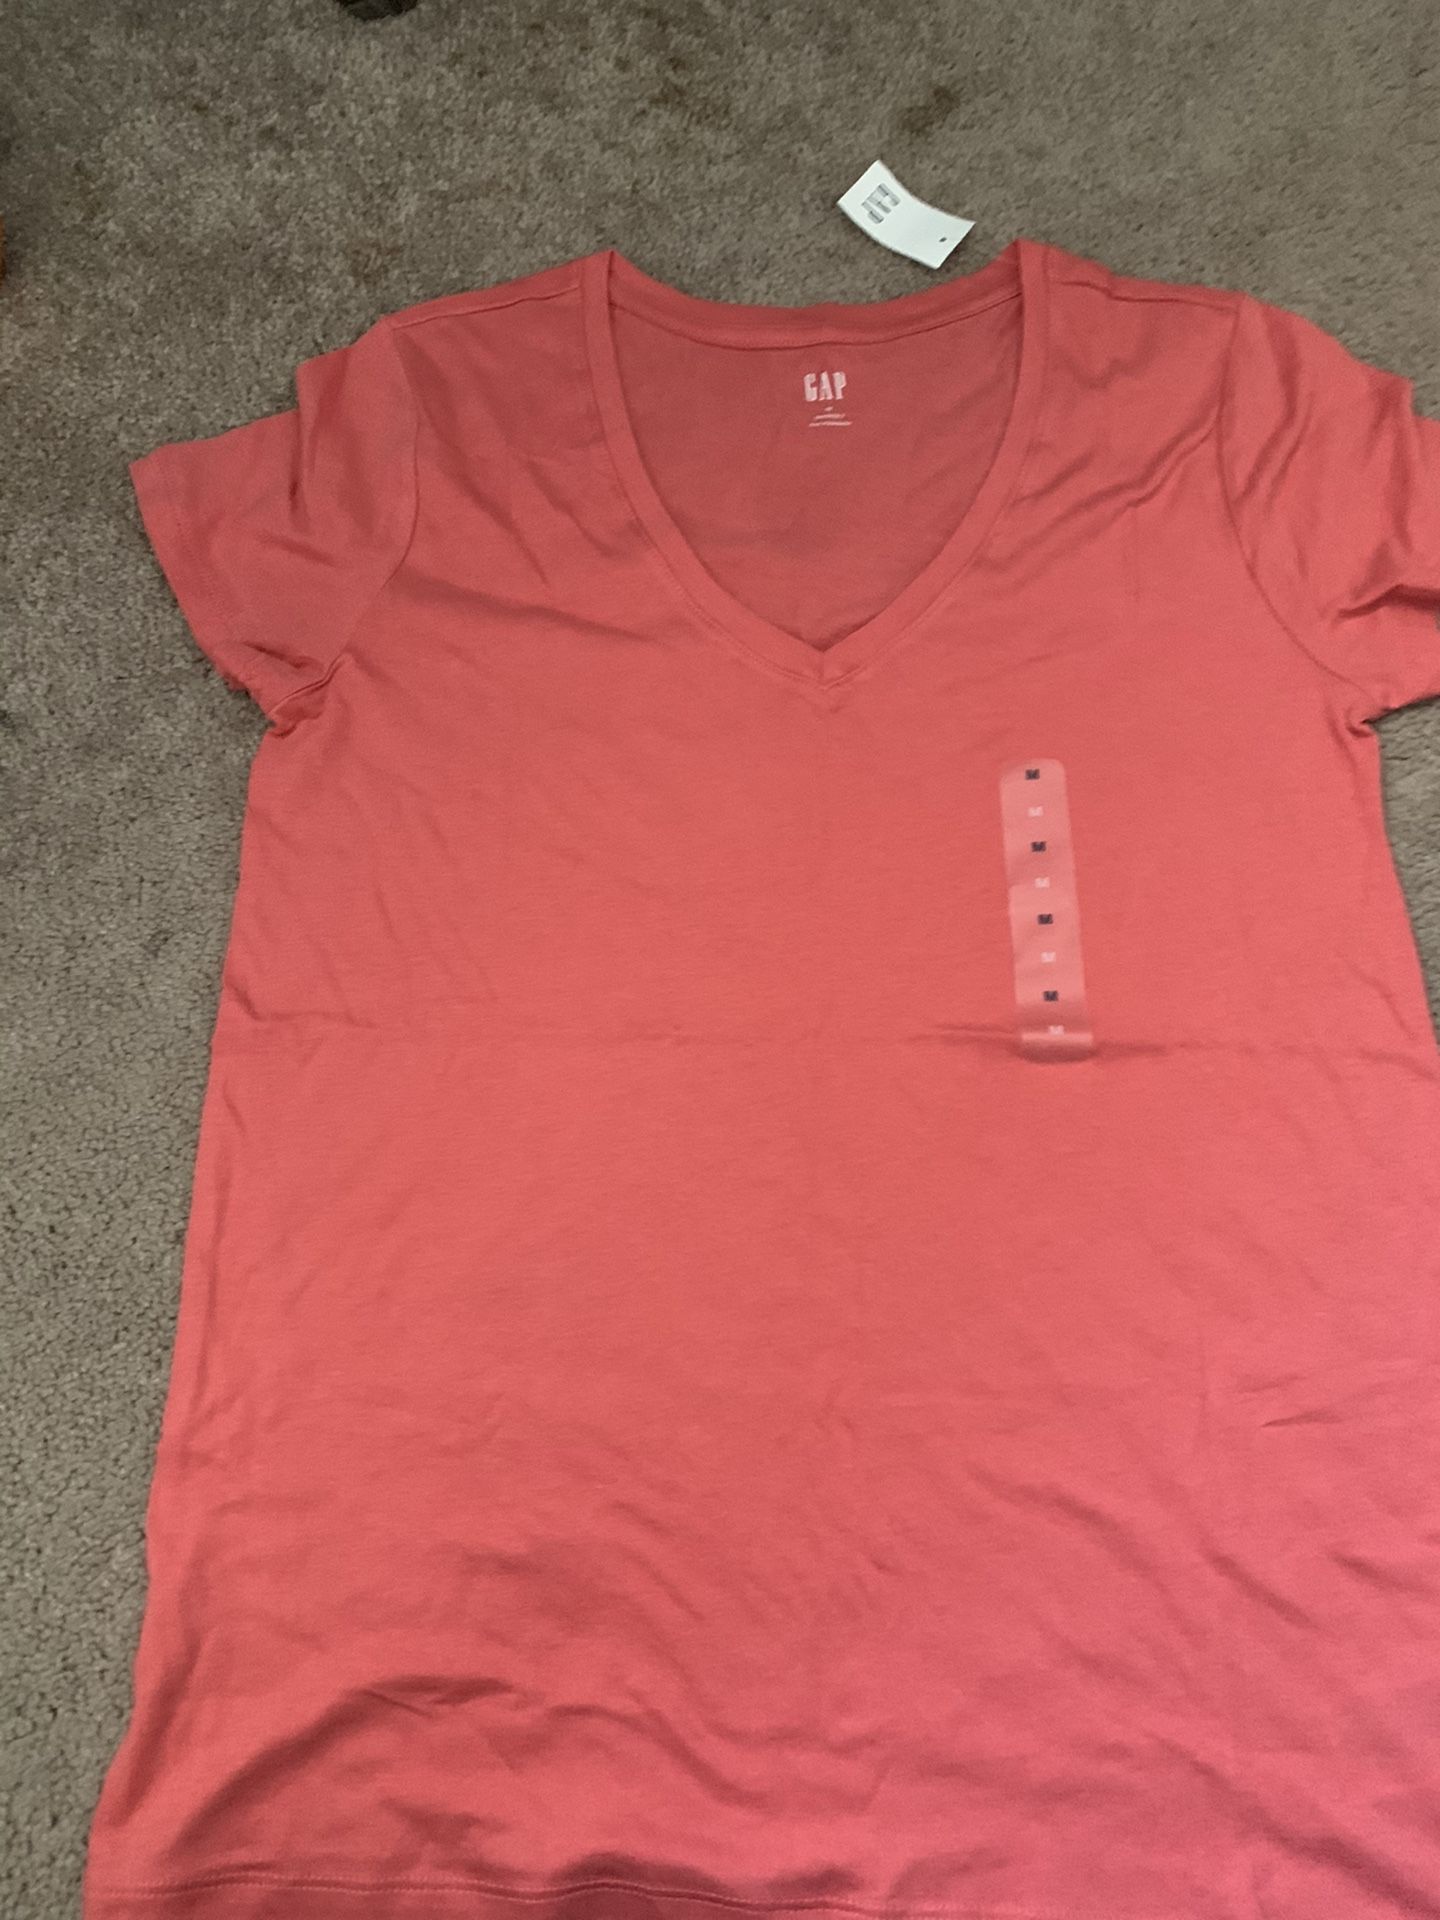 Women’s Gap T-shirt